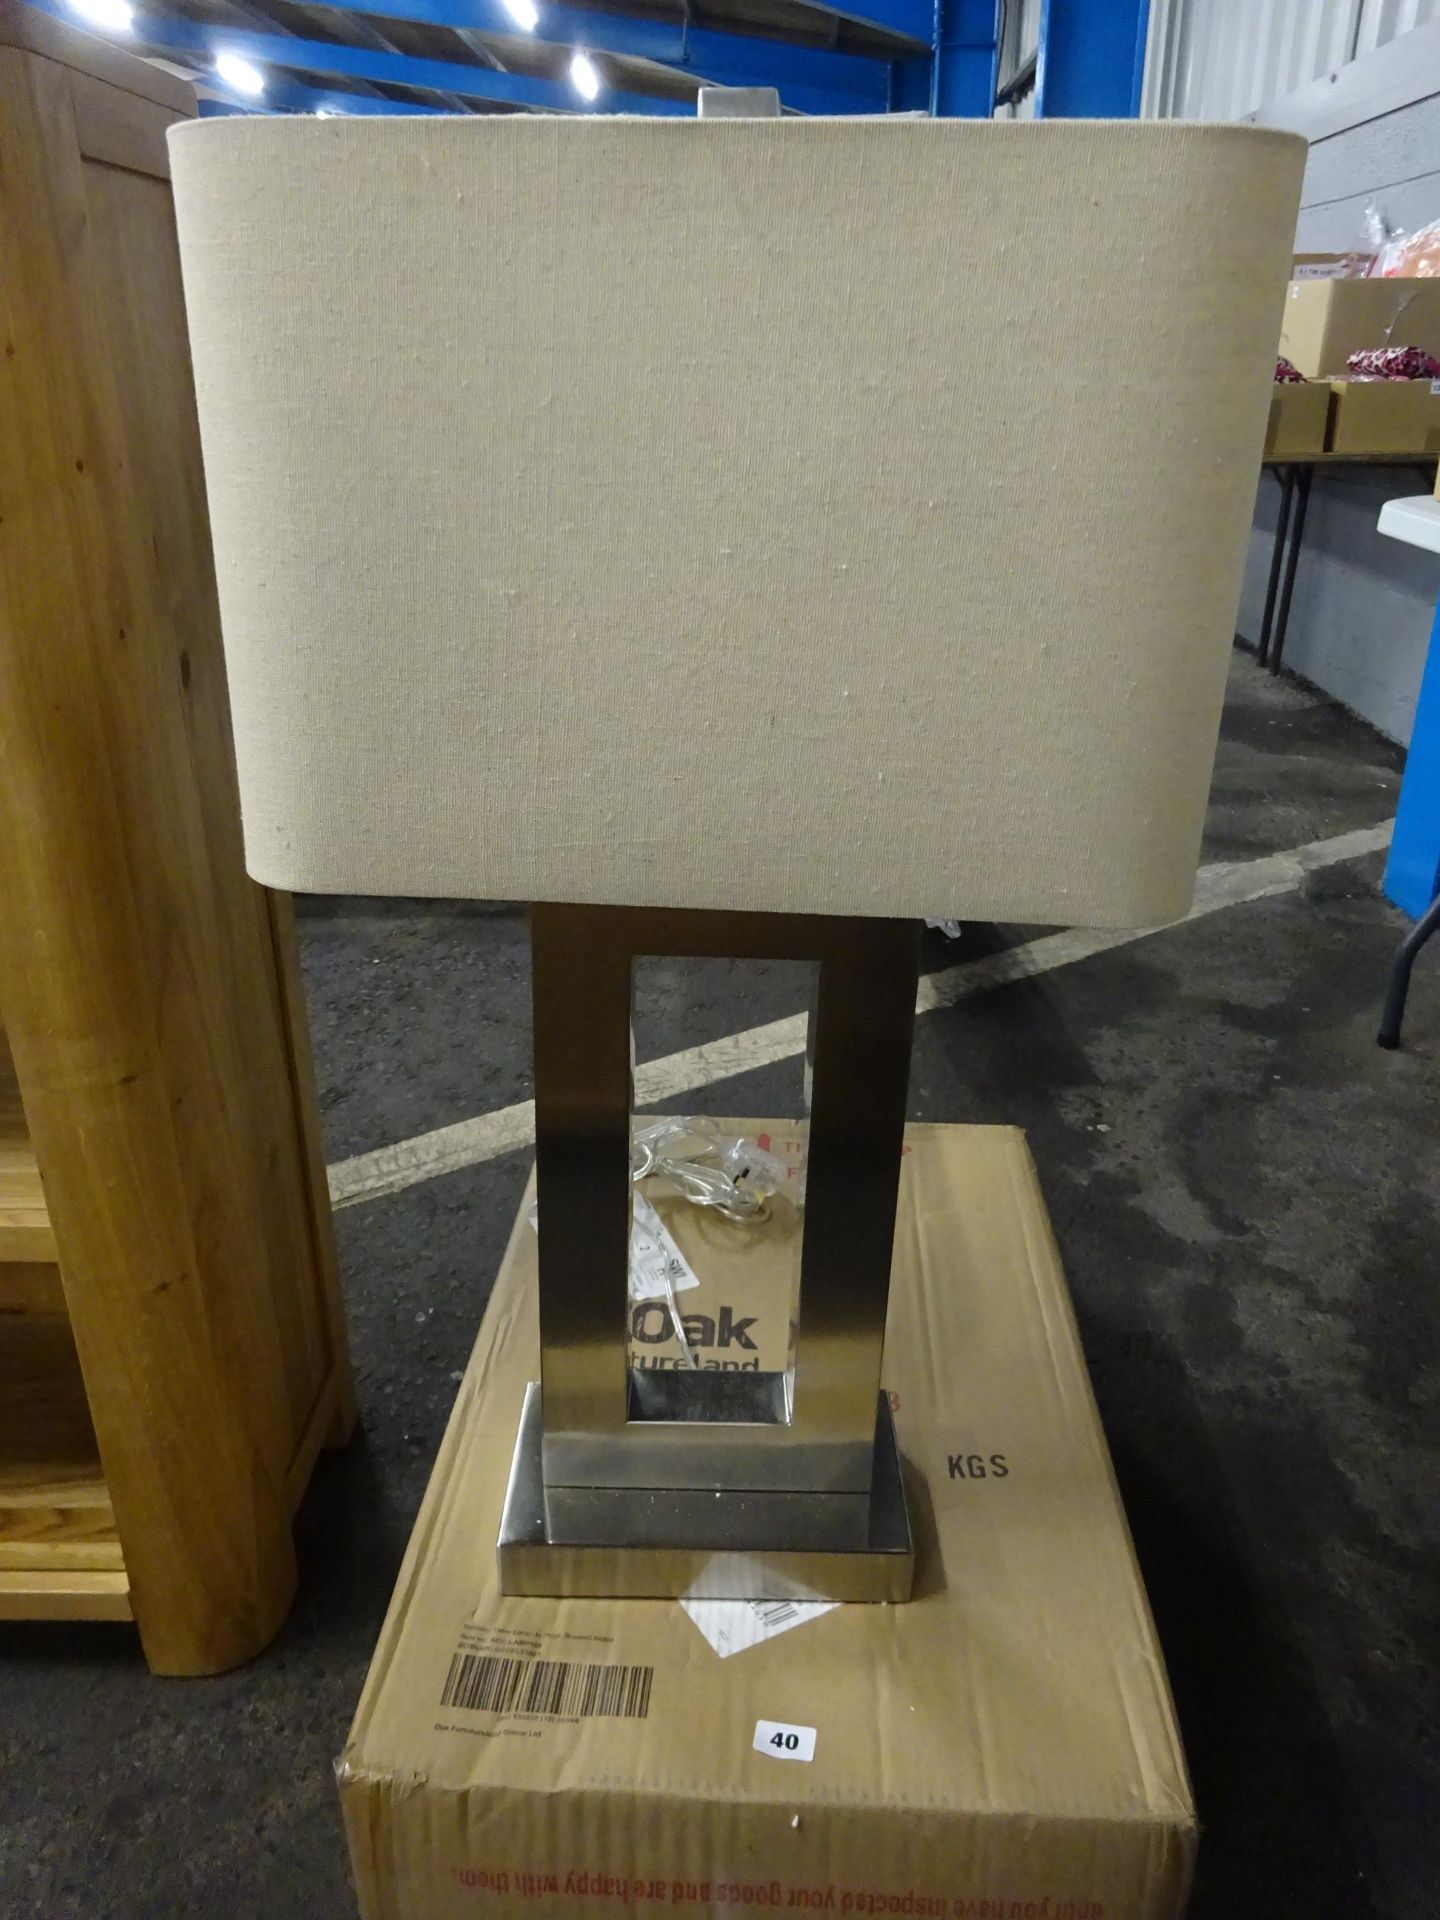 RRP £139.99 - OAK FURNITURELAND BERKELEY TABLE LAMP Brushed Nickel - BOX DOES SAY FAULTY ON IT, - Image 2 of 2